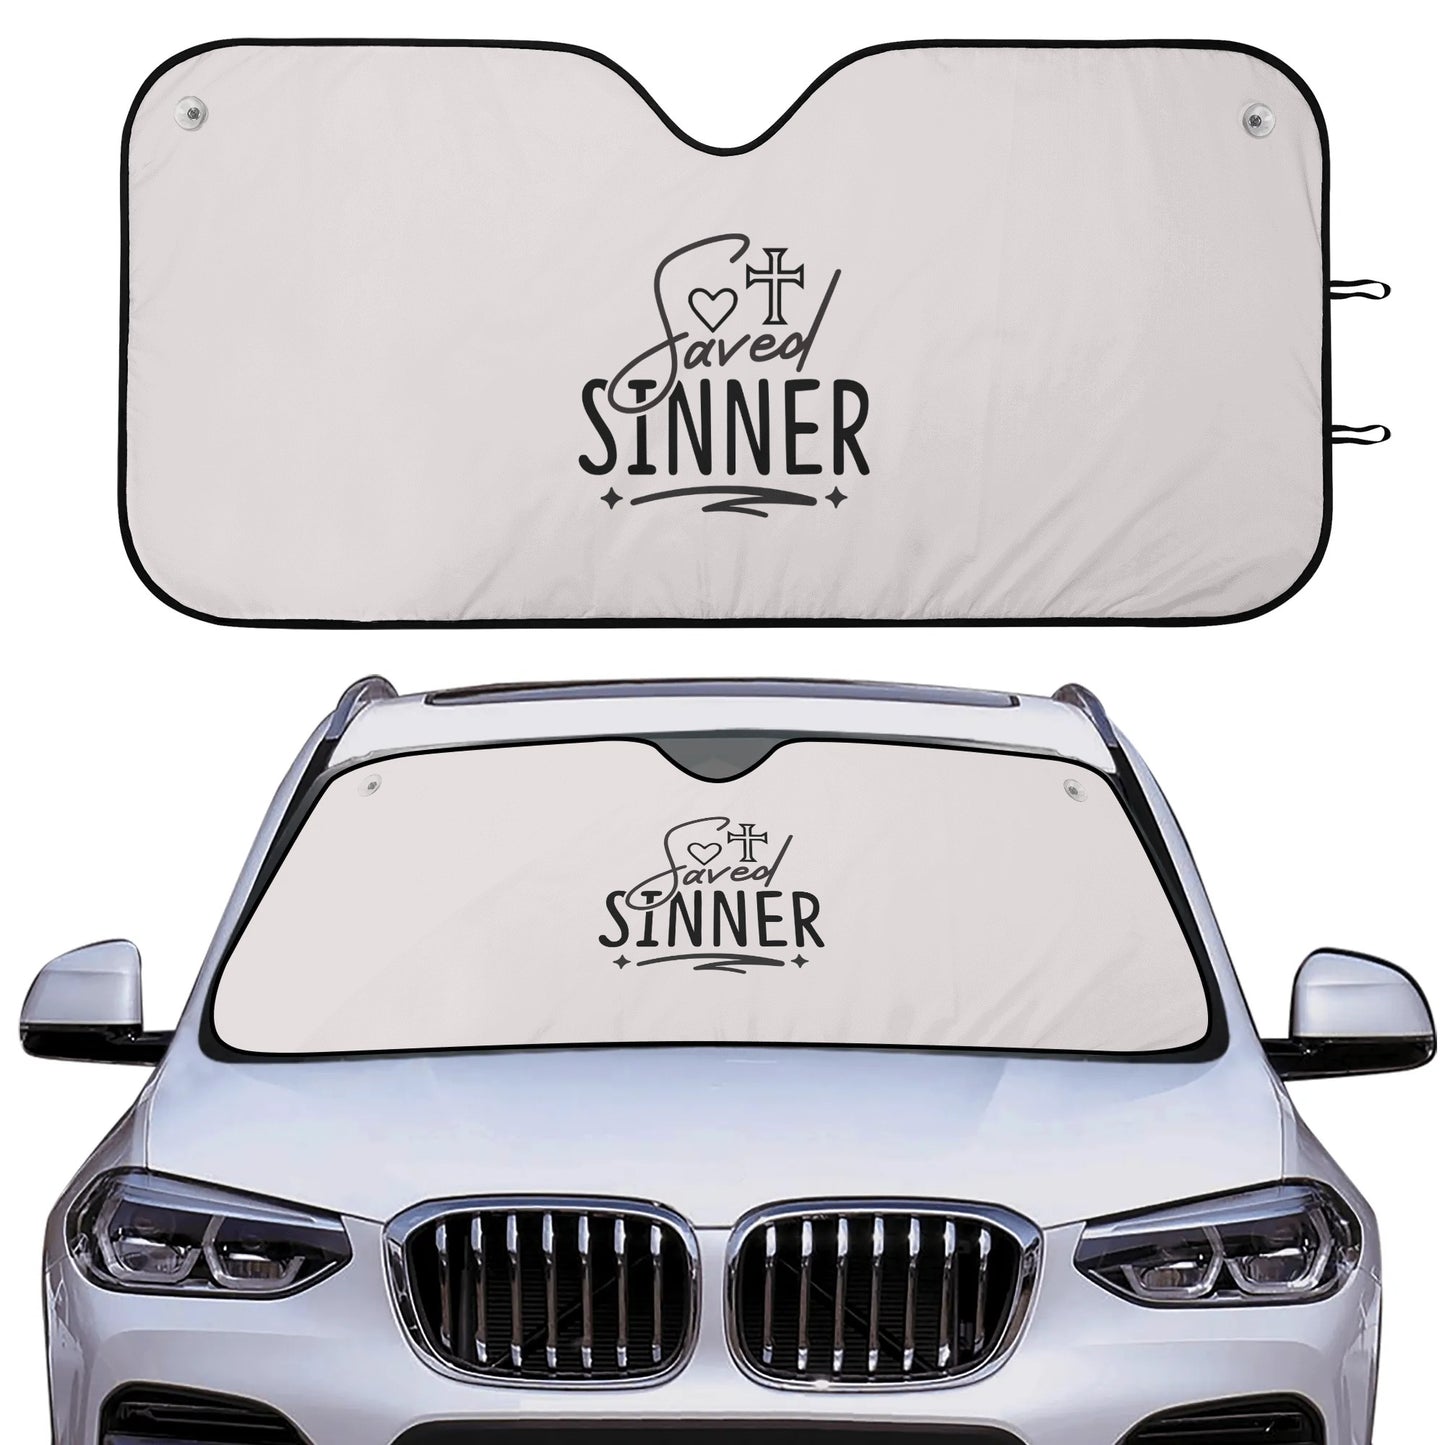 Saved Sinner Car Sunshade Christian Car Accessories popcustoms